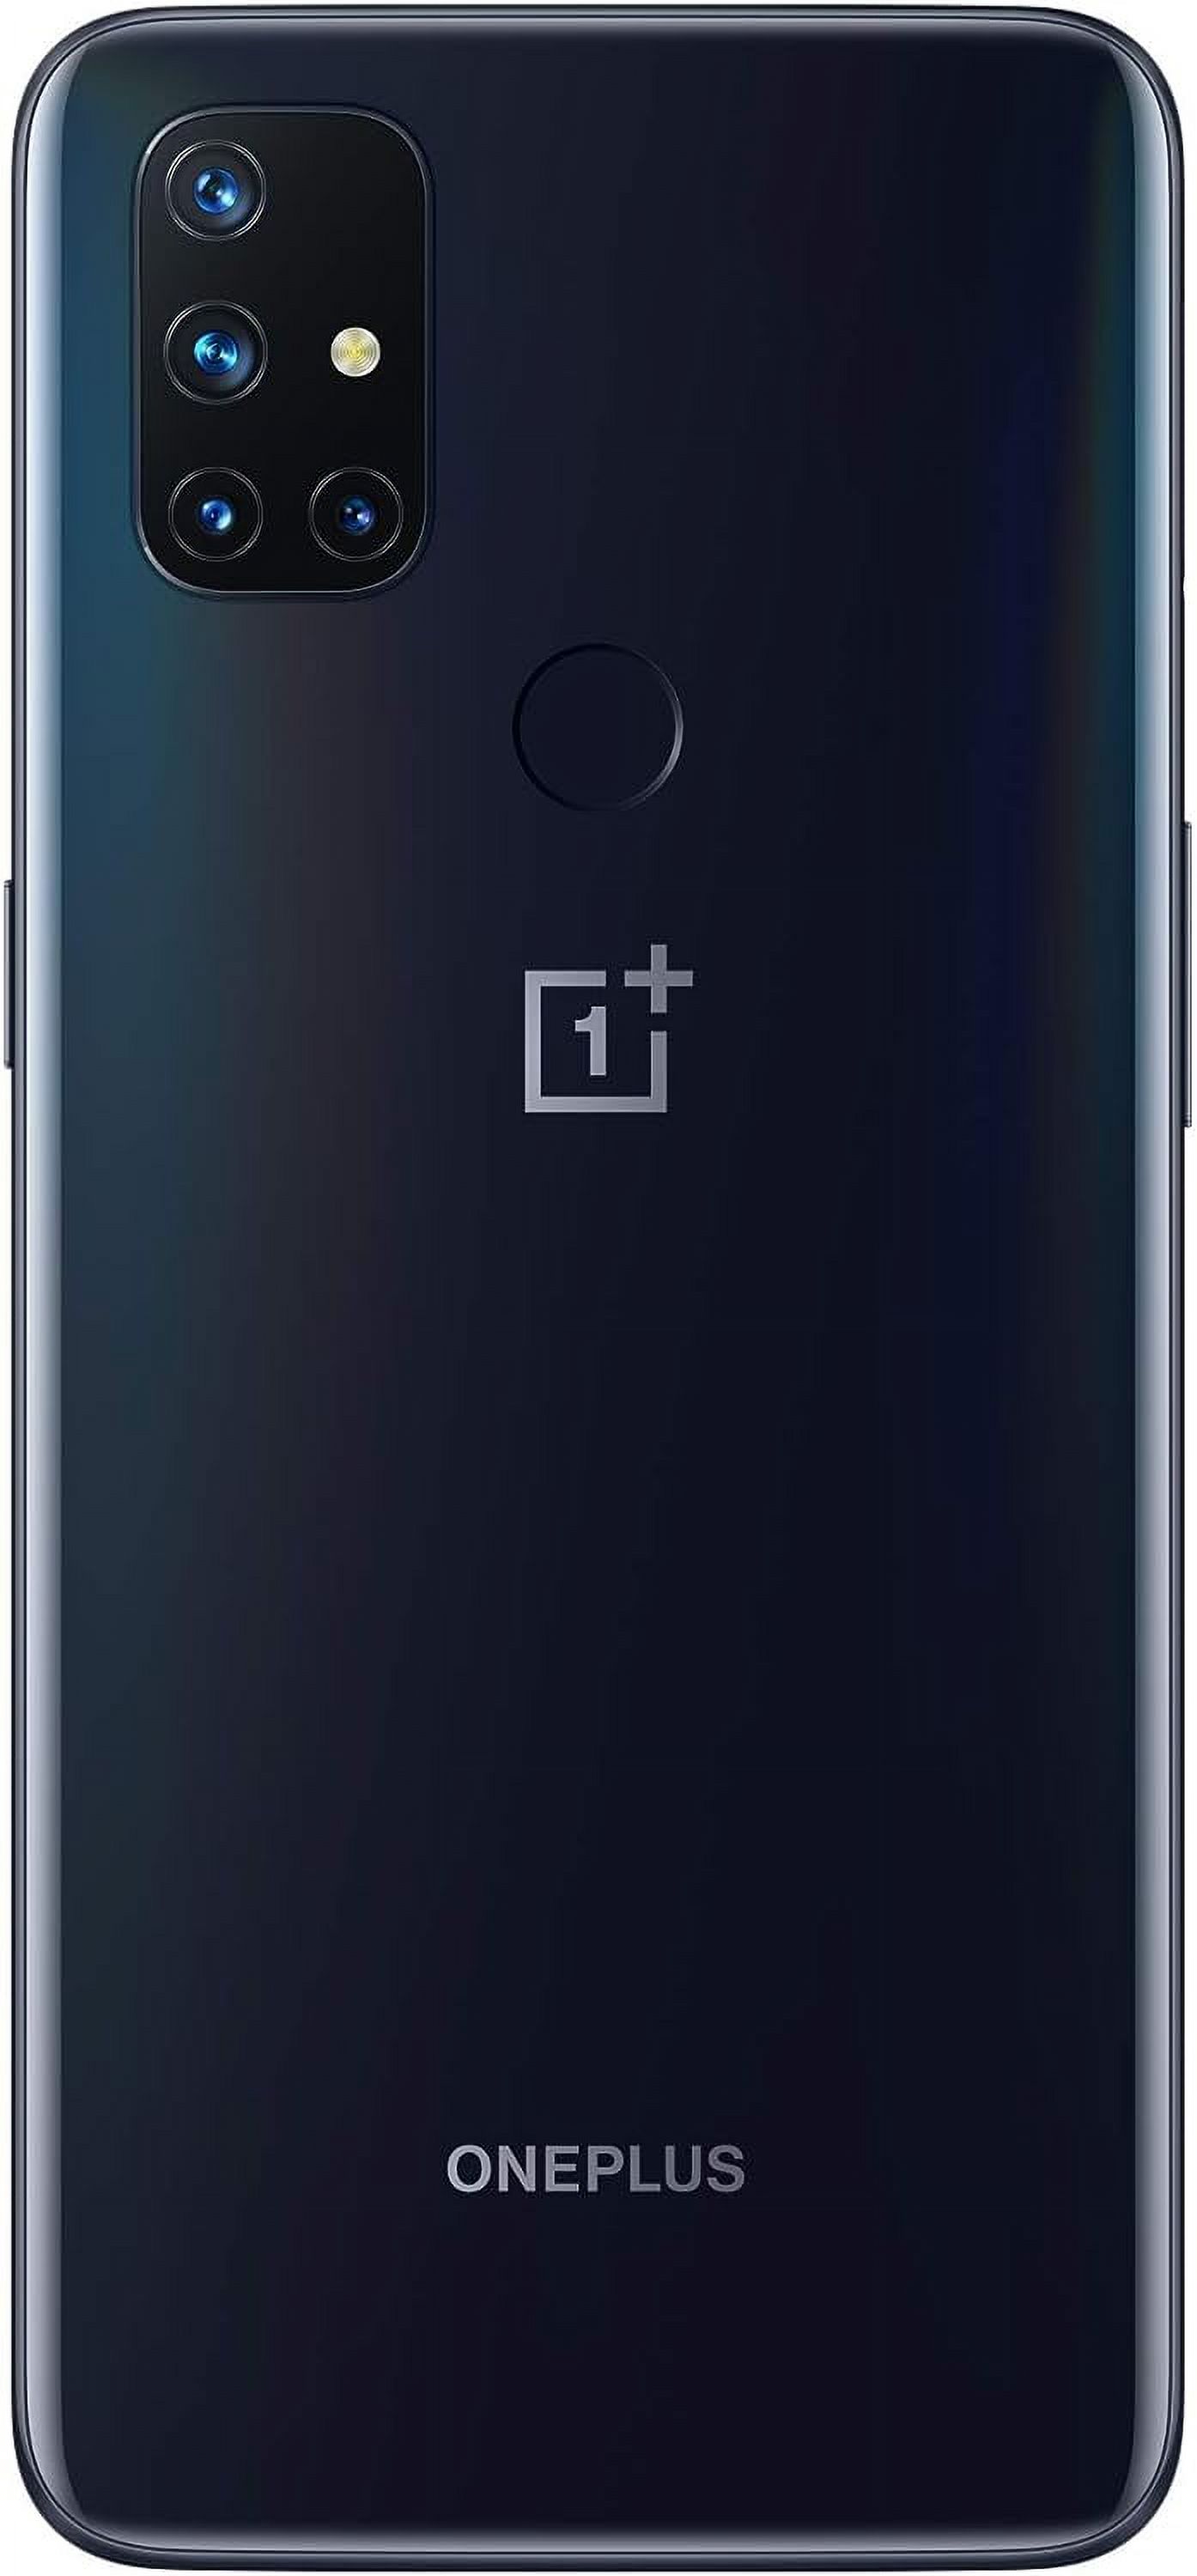 OnePlus Nord N10 128GB 5G Dual SIM 6GB RAM GSM Factory Unlocked Smartphone, Midnight Ice (International Version) - image 5 of 5